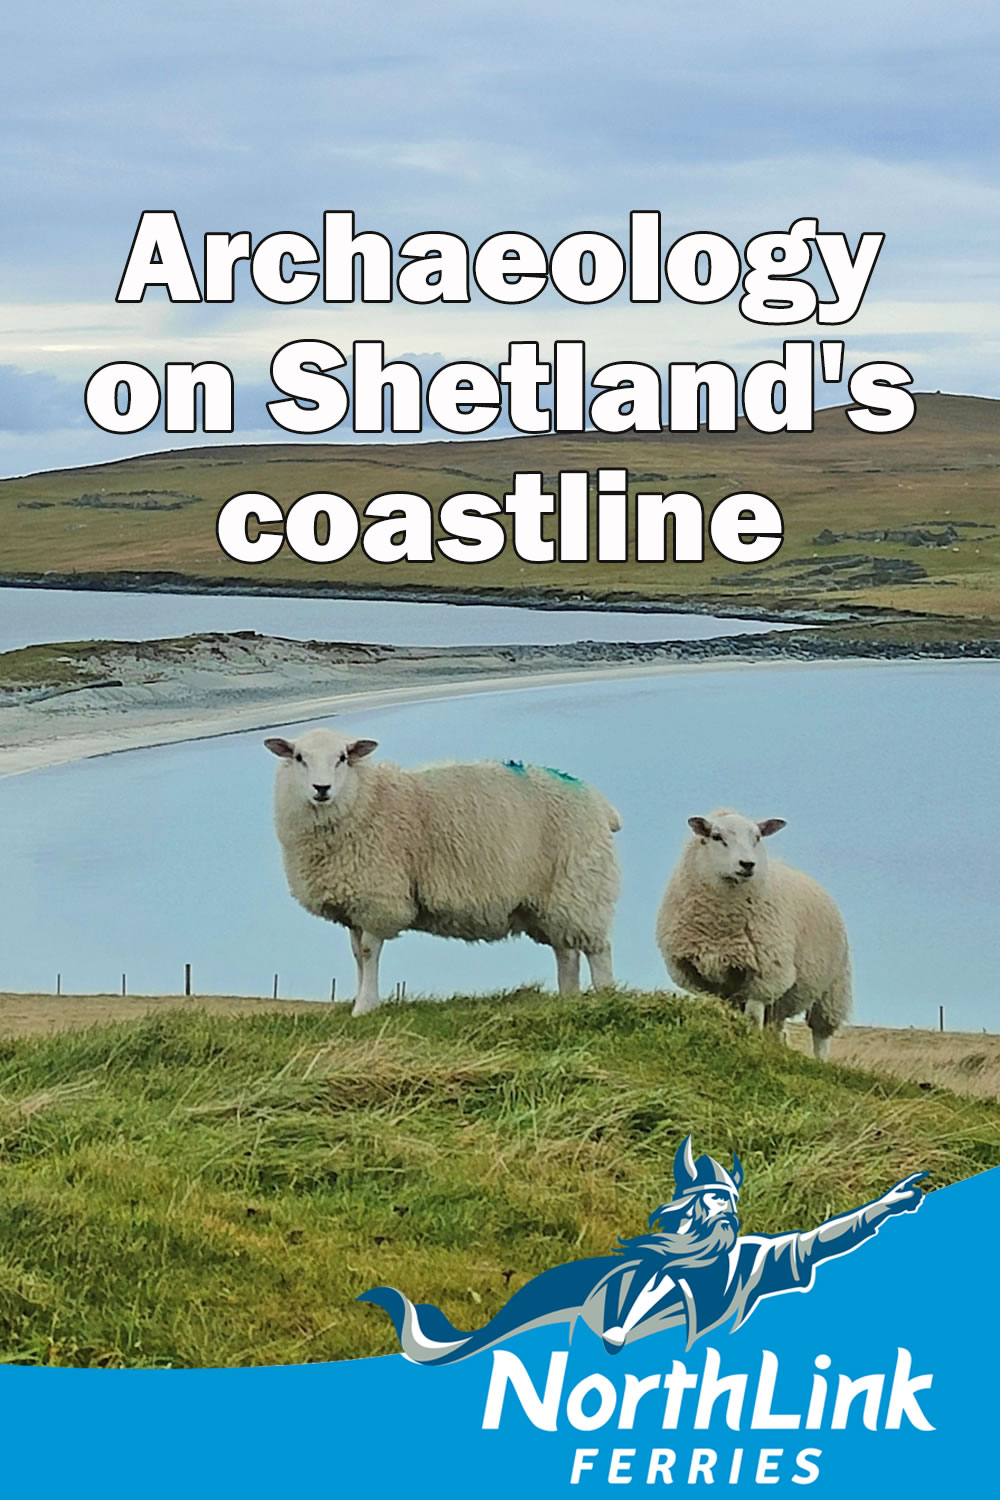 Archaeology on Shetland's coastline